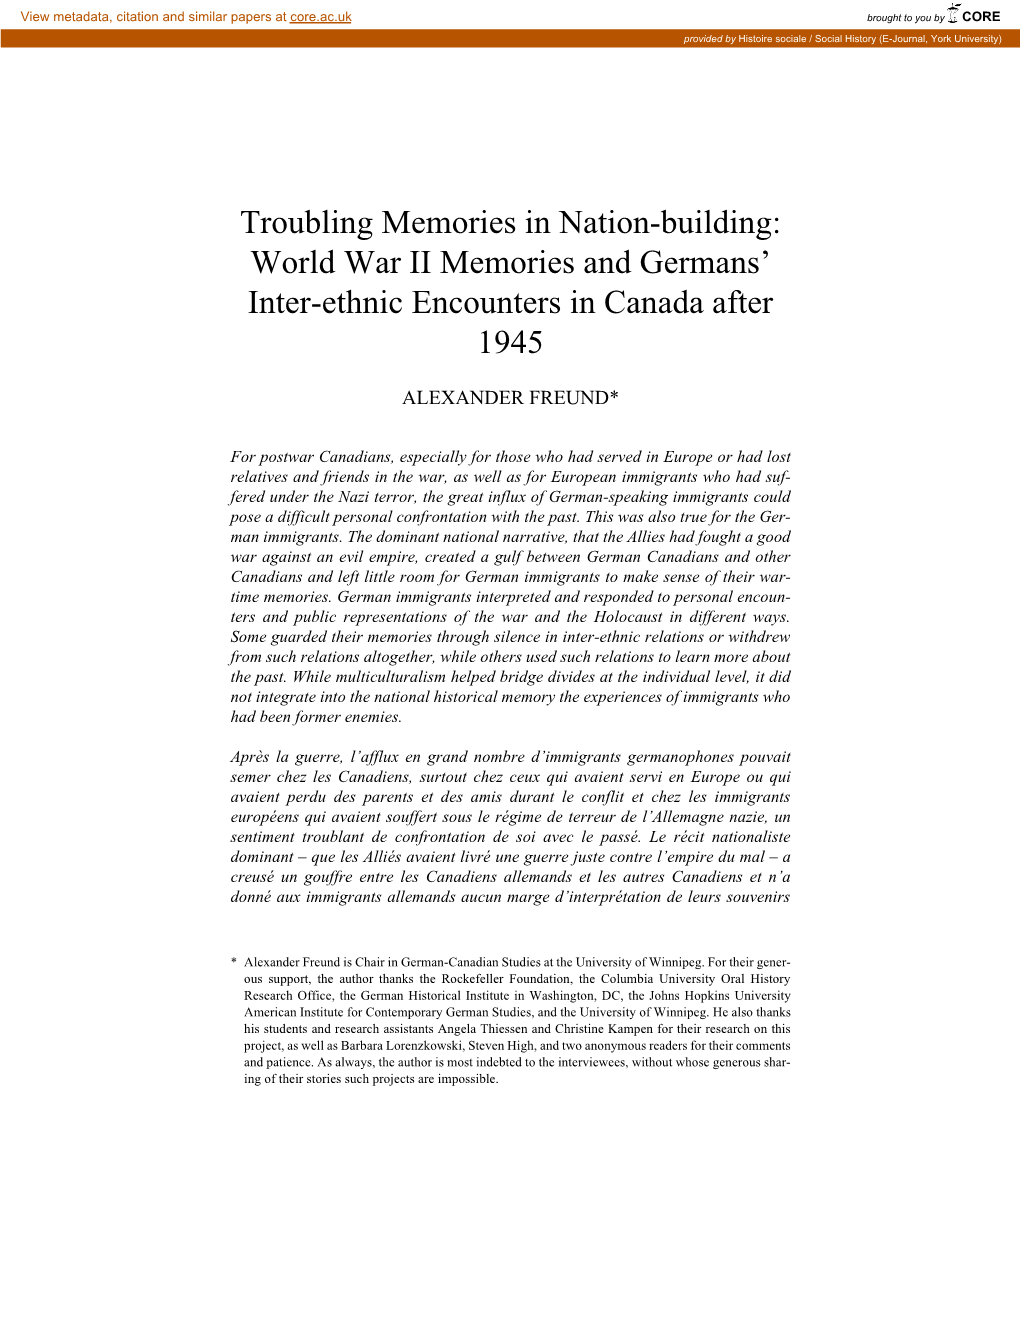 World War II Memories and Germans' Inter-Ethnic Encounters in Canada